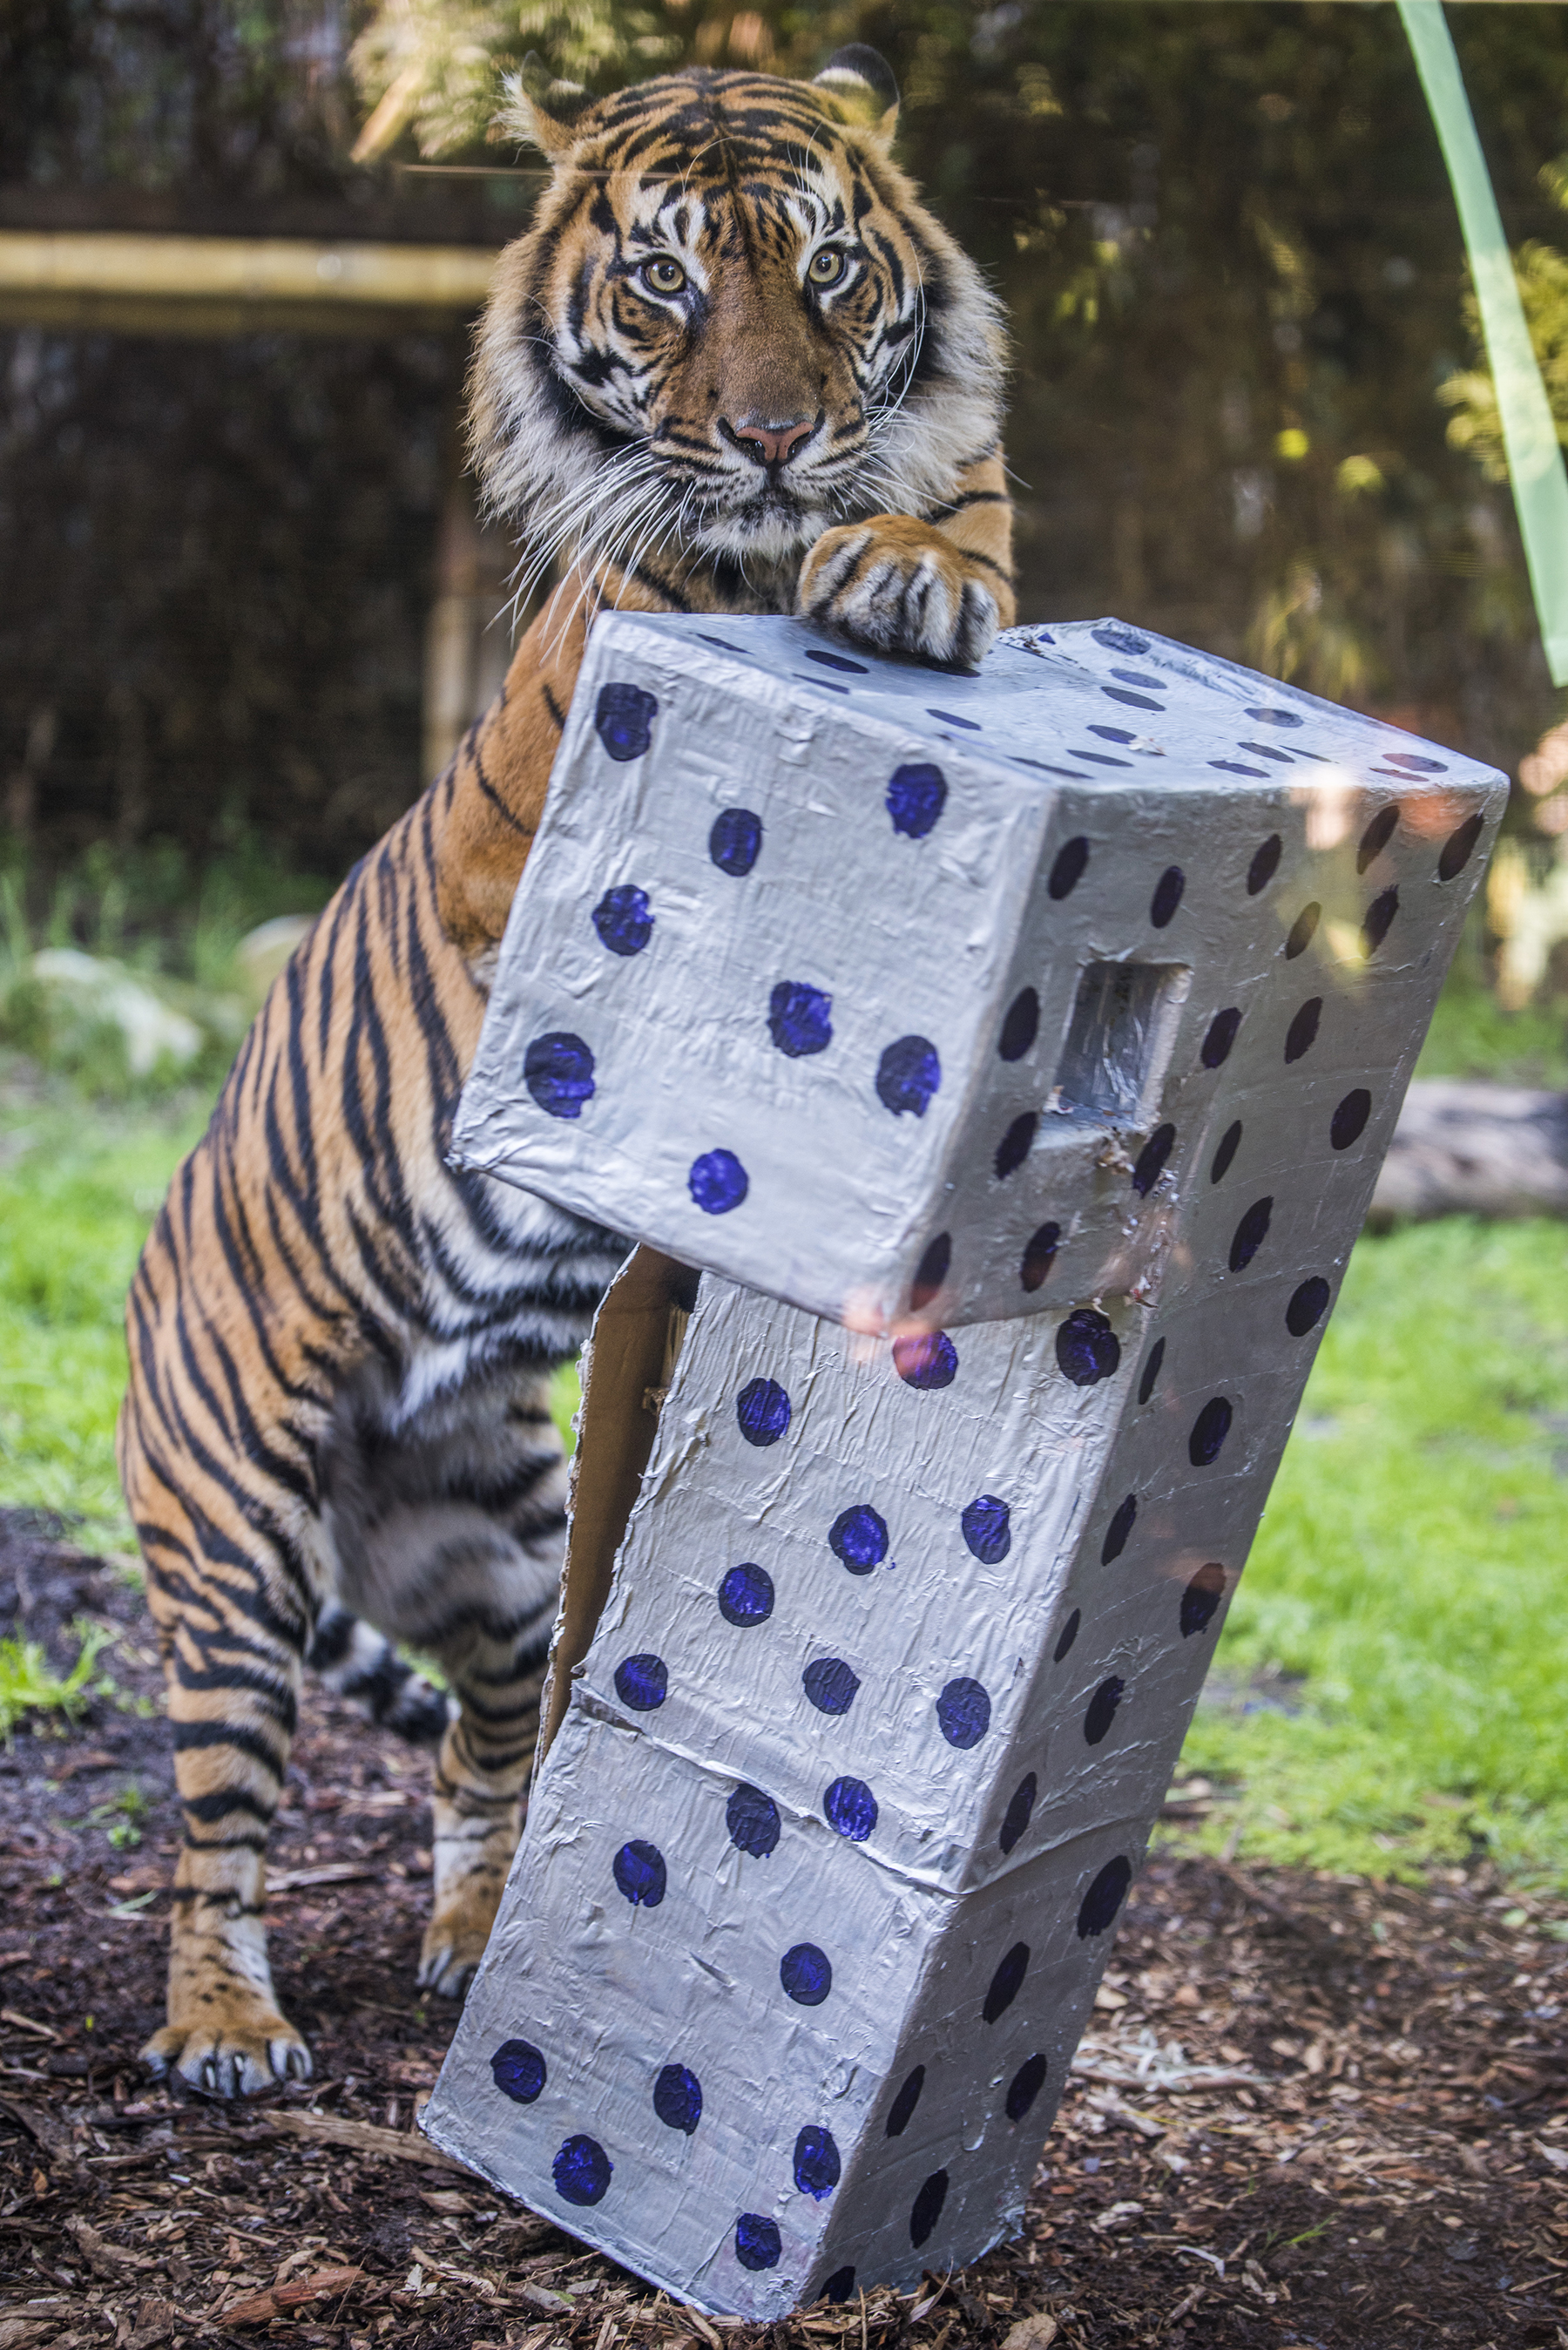 Tiger jumping on his birthday present